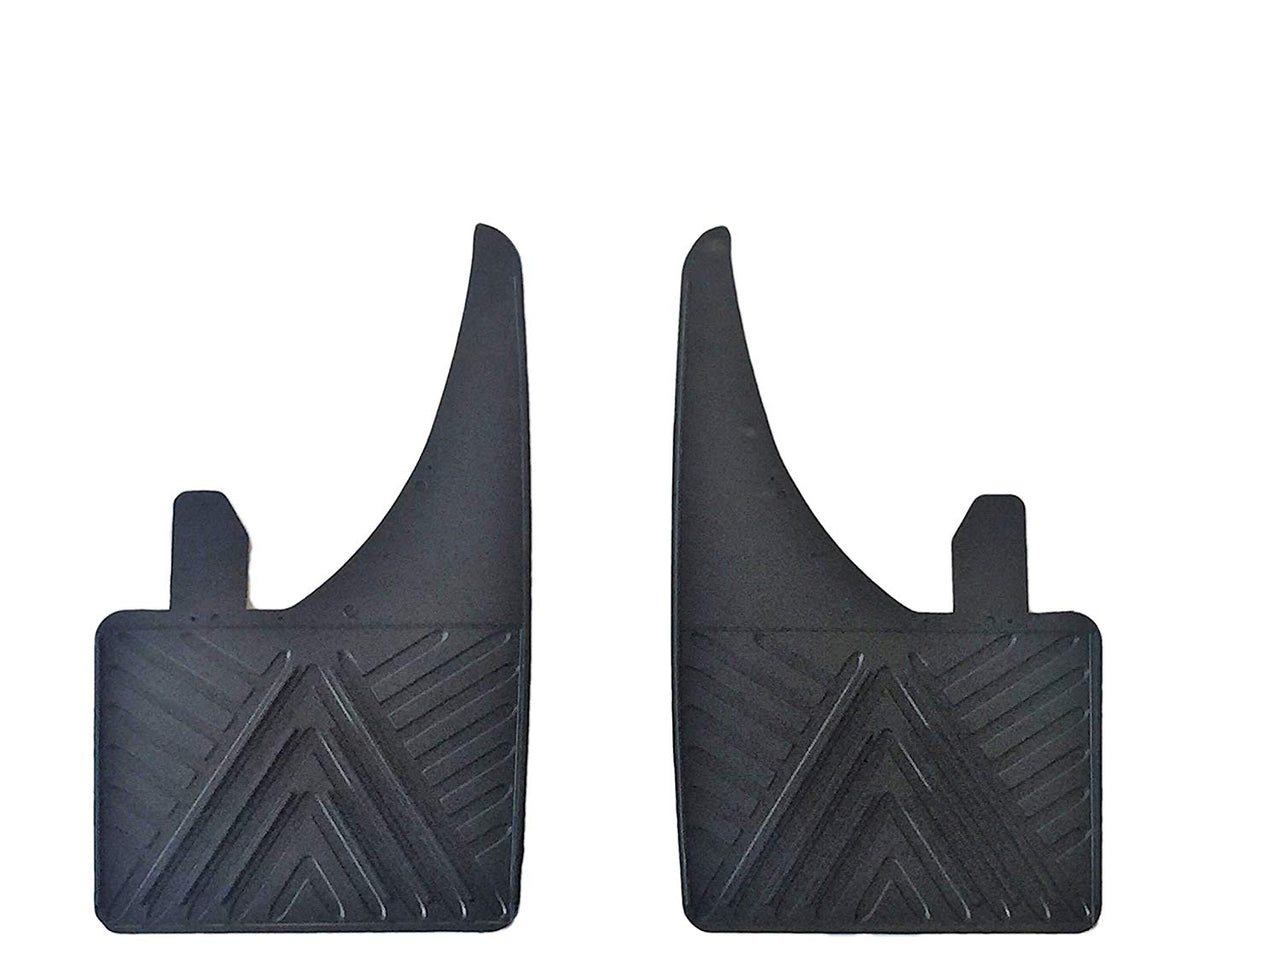 New Pair of 2 Universal Black Citroen Mud Flaps With Citroen Logo Fit Citroen C3 Citroen C1 Citroen C4 Citroen Picasso Citroen Van Citroen Berlingo Front or Rear Rally Mudflaps Splash Guard - LK Auto Factors